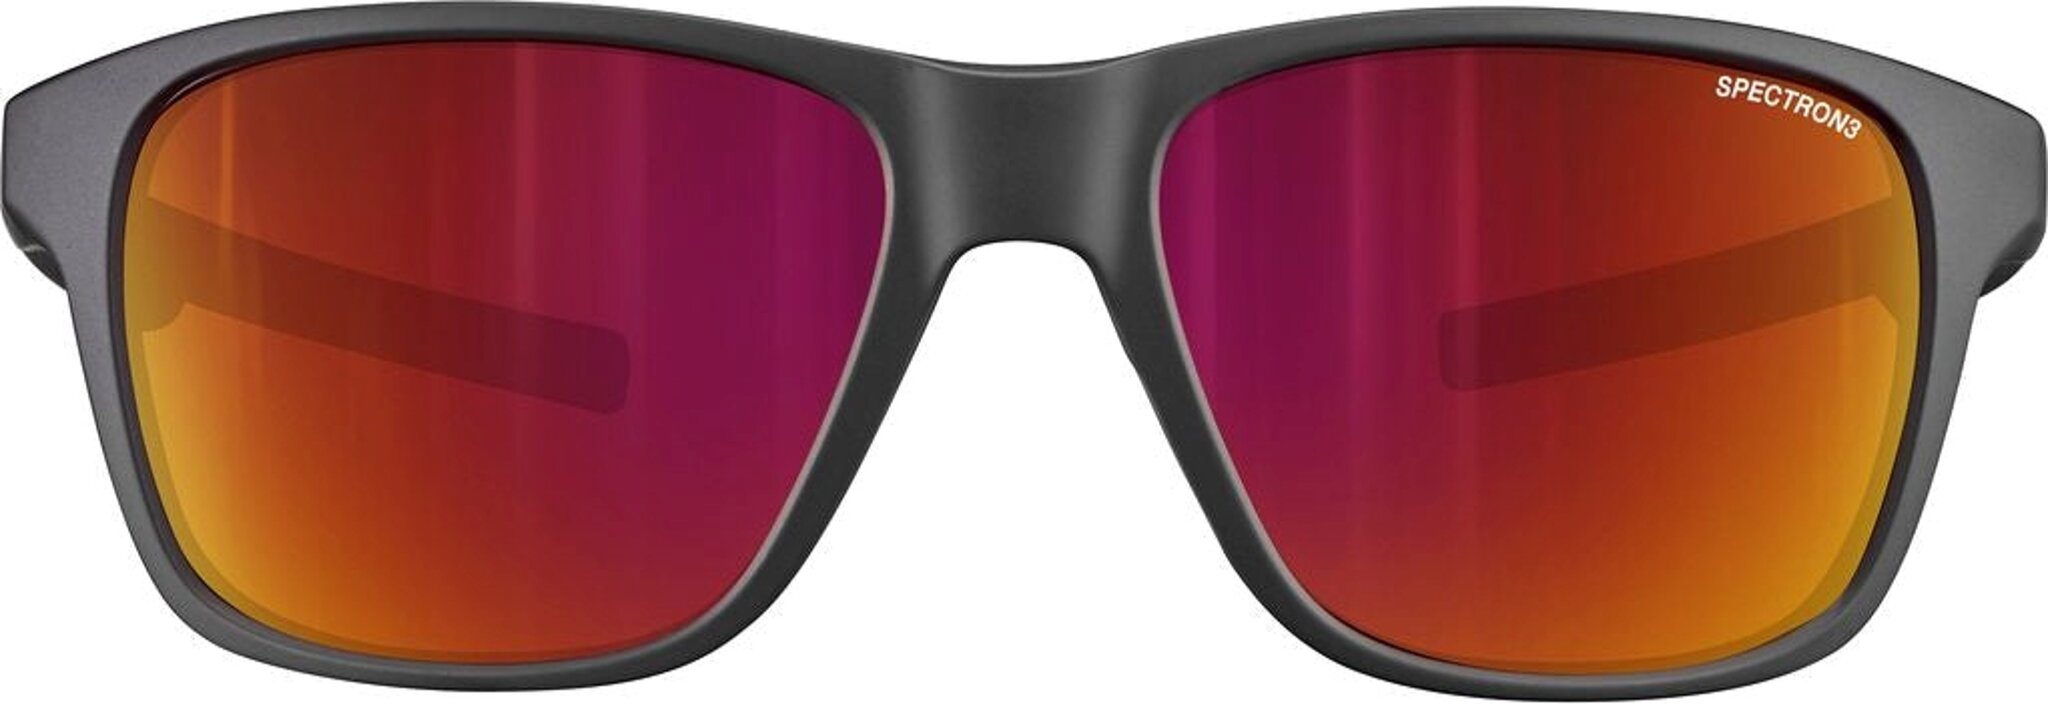 Julbo Lounge Spectron 3 Sunglasses - Unisex